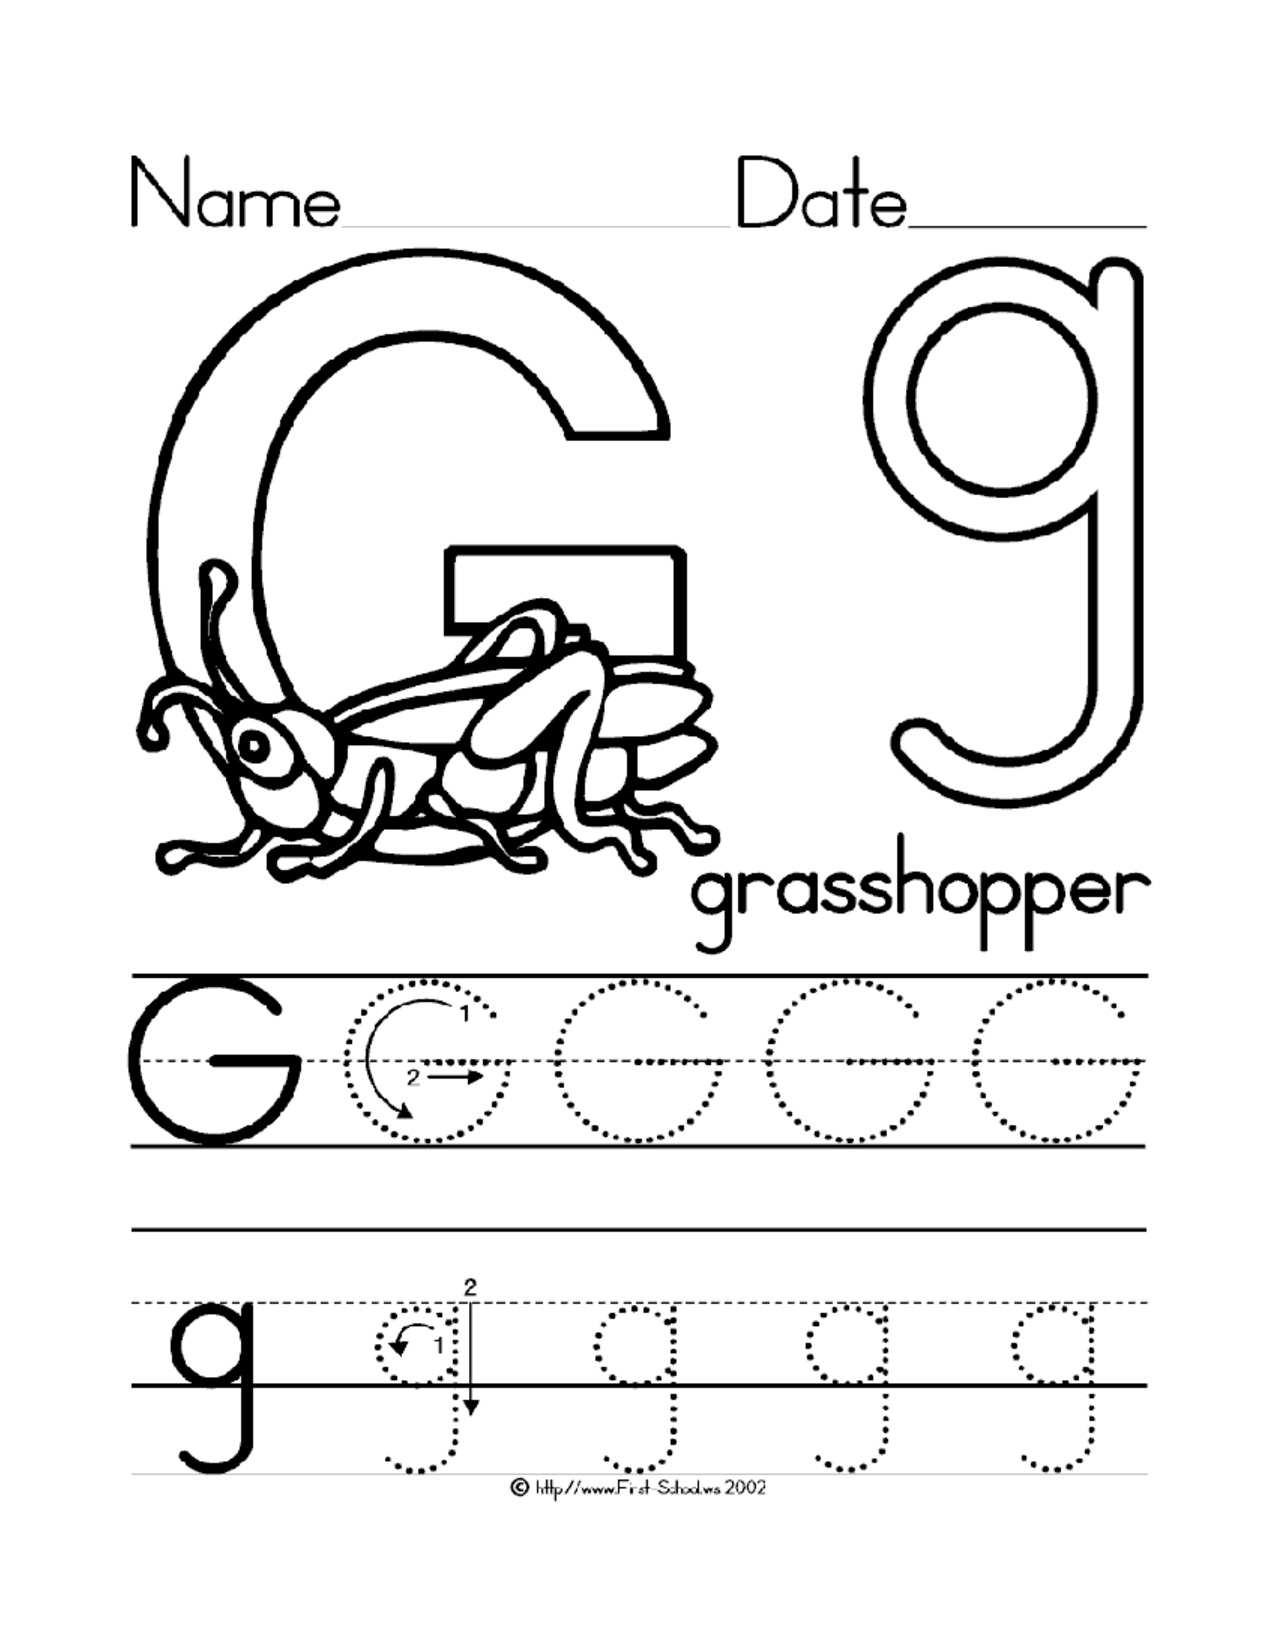 16 Best Images of Traceable Letter G Worksheet - Letter G Tracing